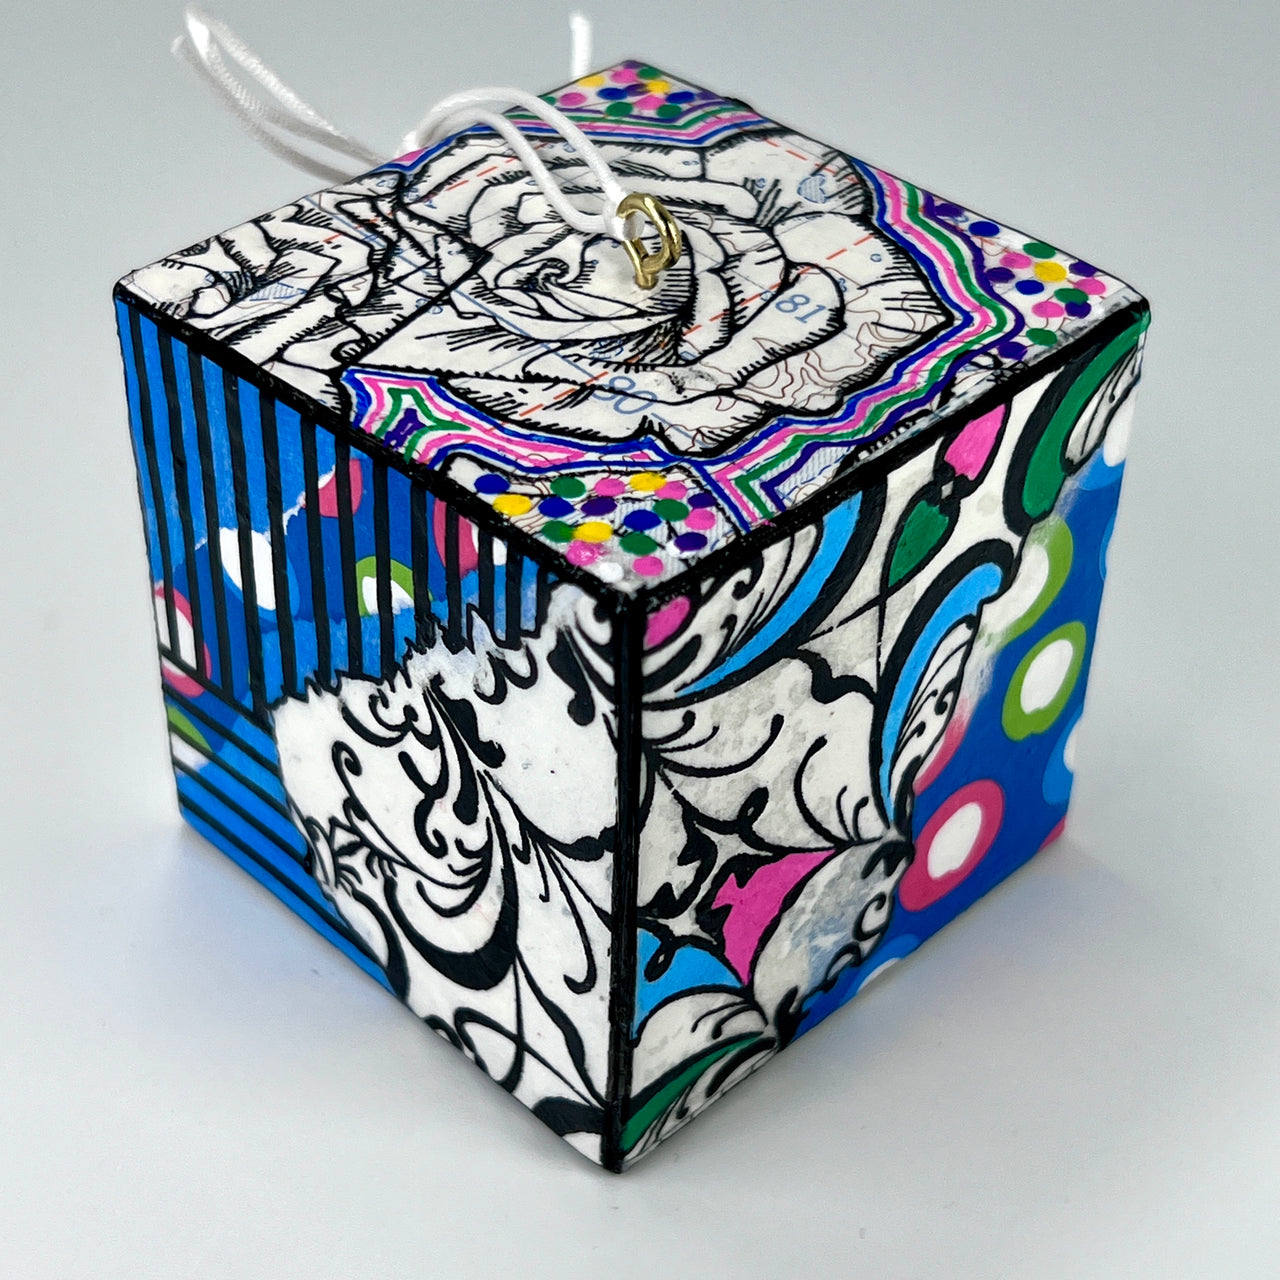 #12 - 3D Cube Art - 2.25" cube